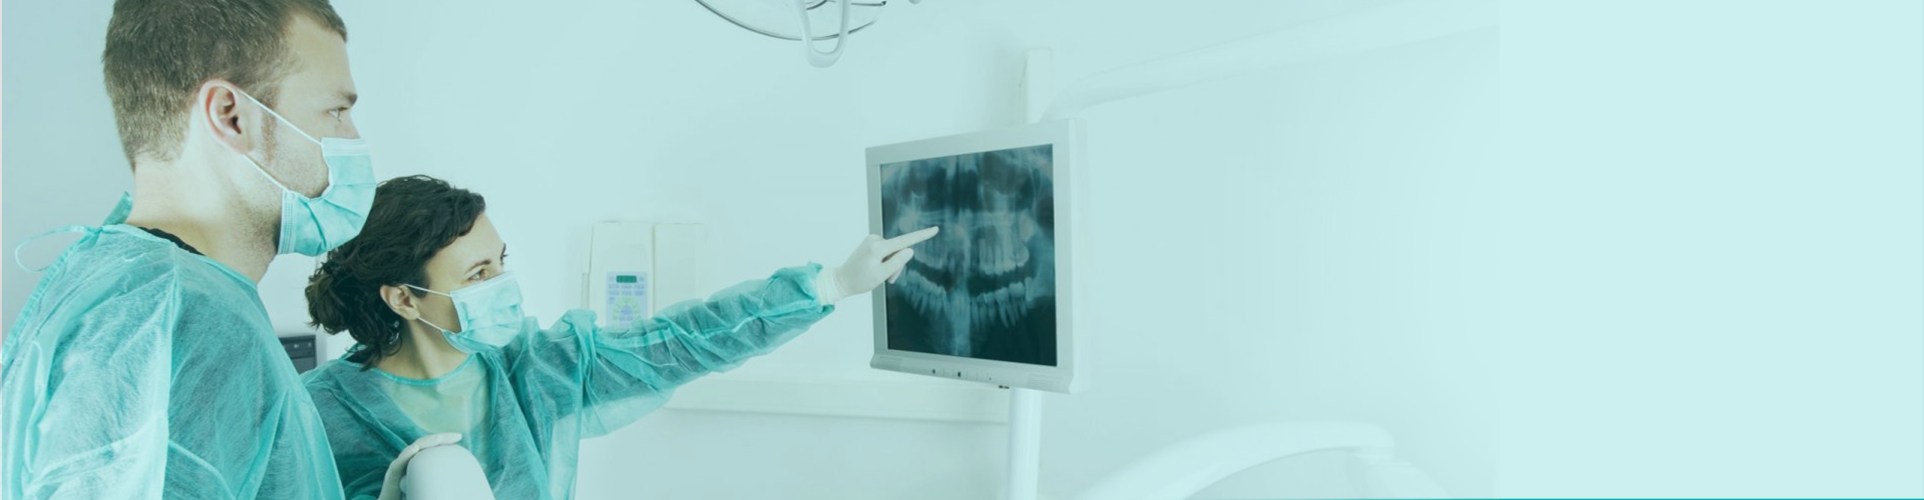 Radiologia odontológica